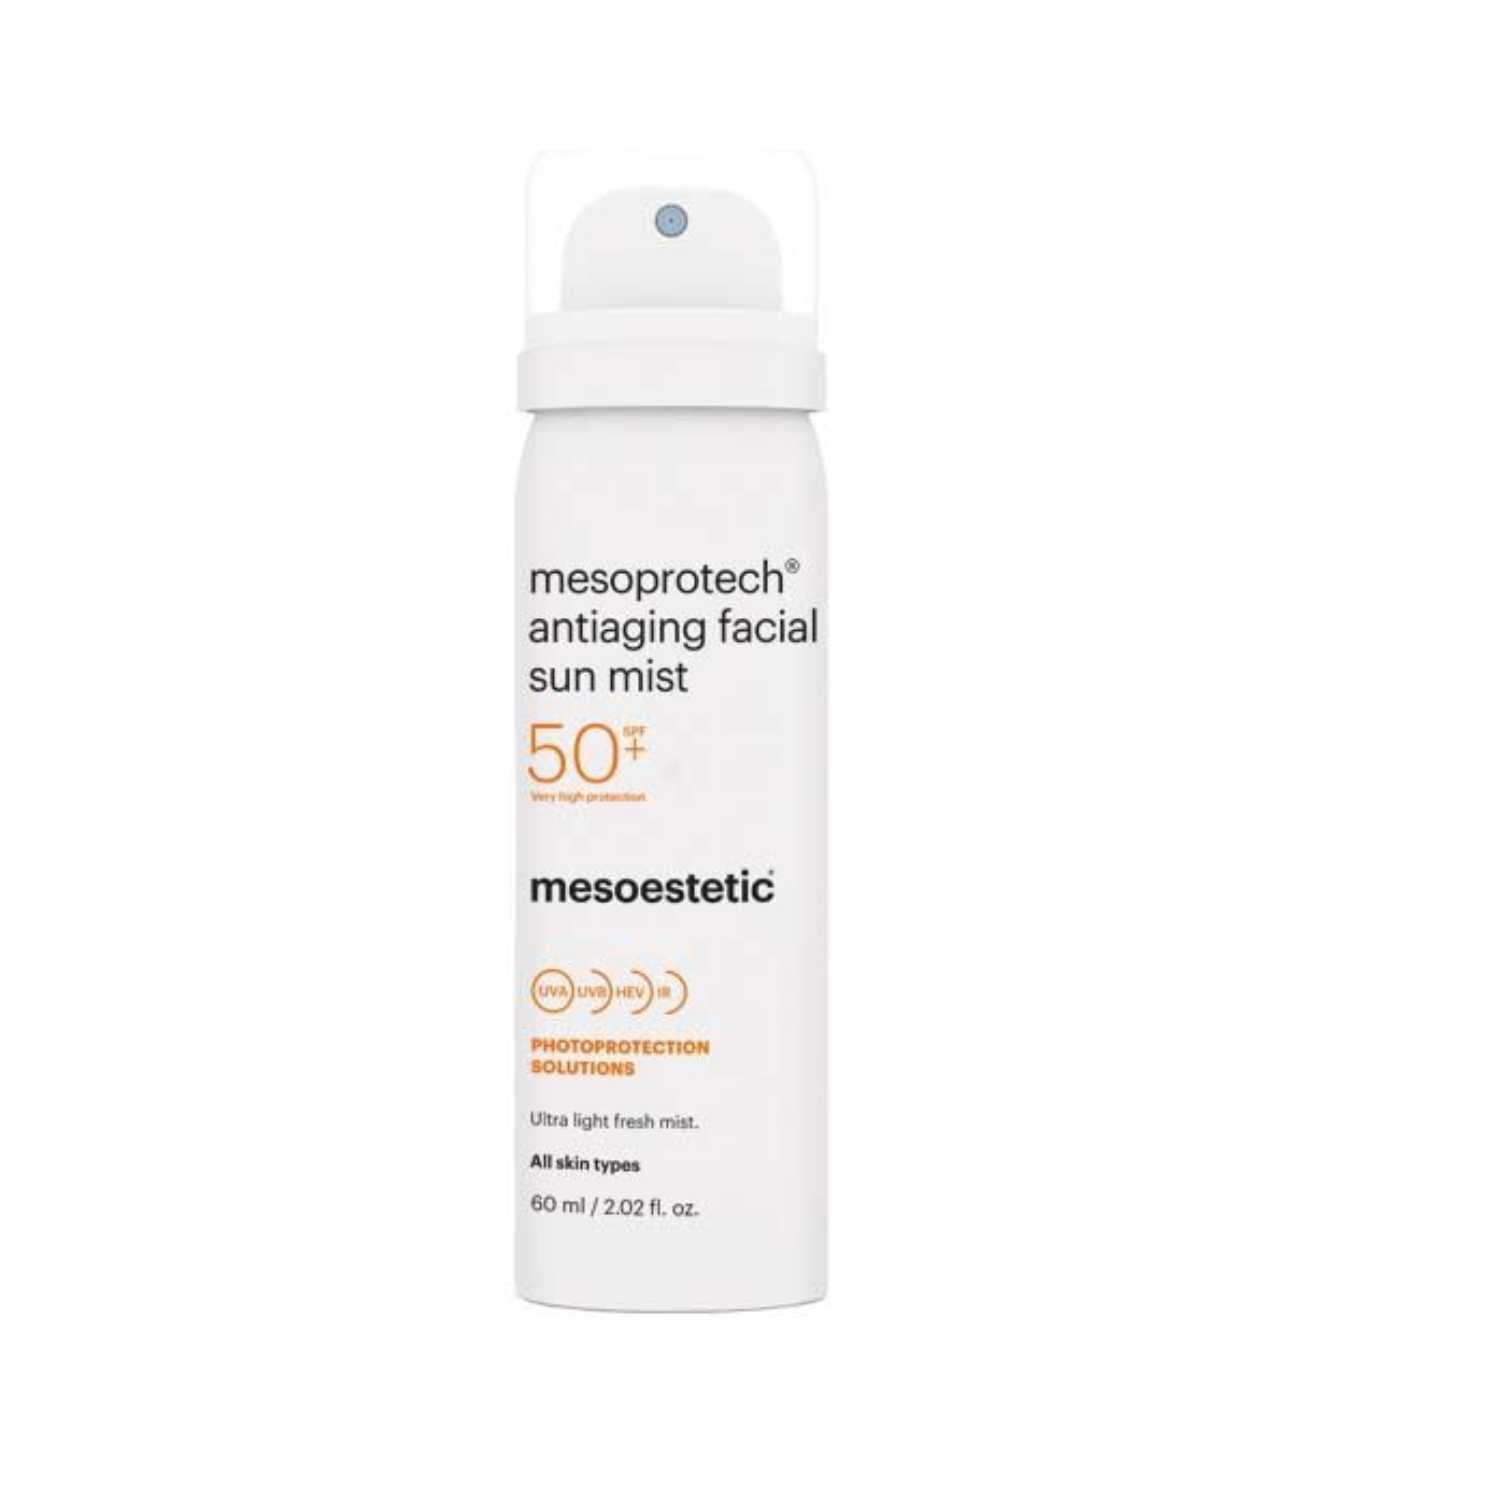 Mesoestetic®mesoprotech antiaging facial sun mist 50+